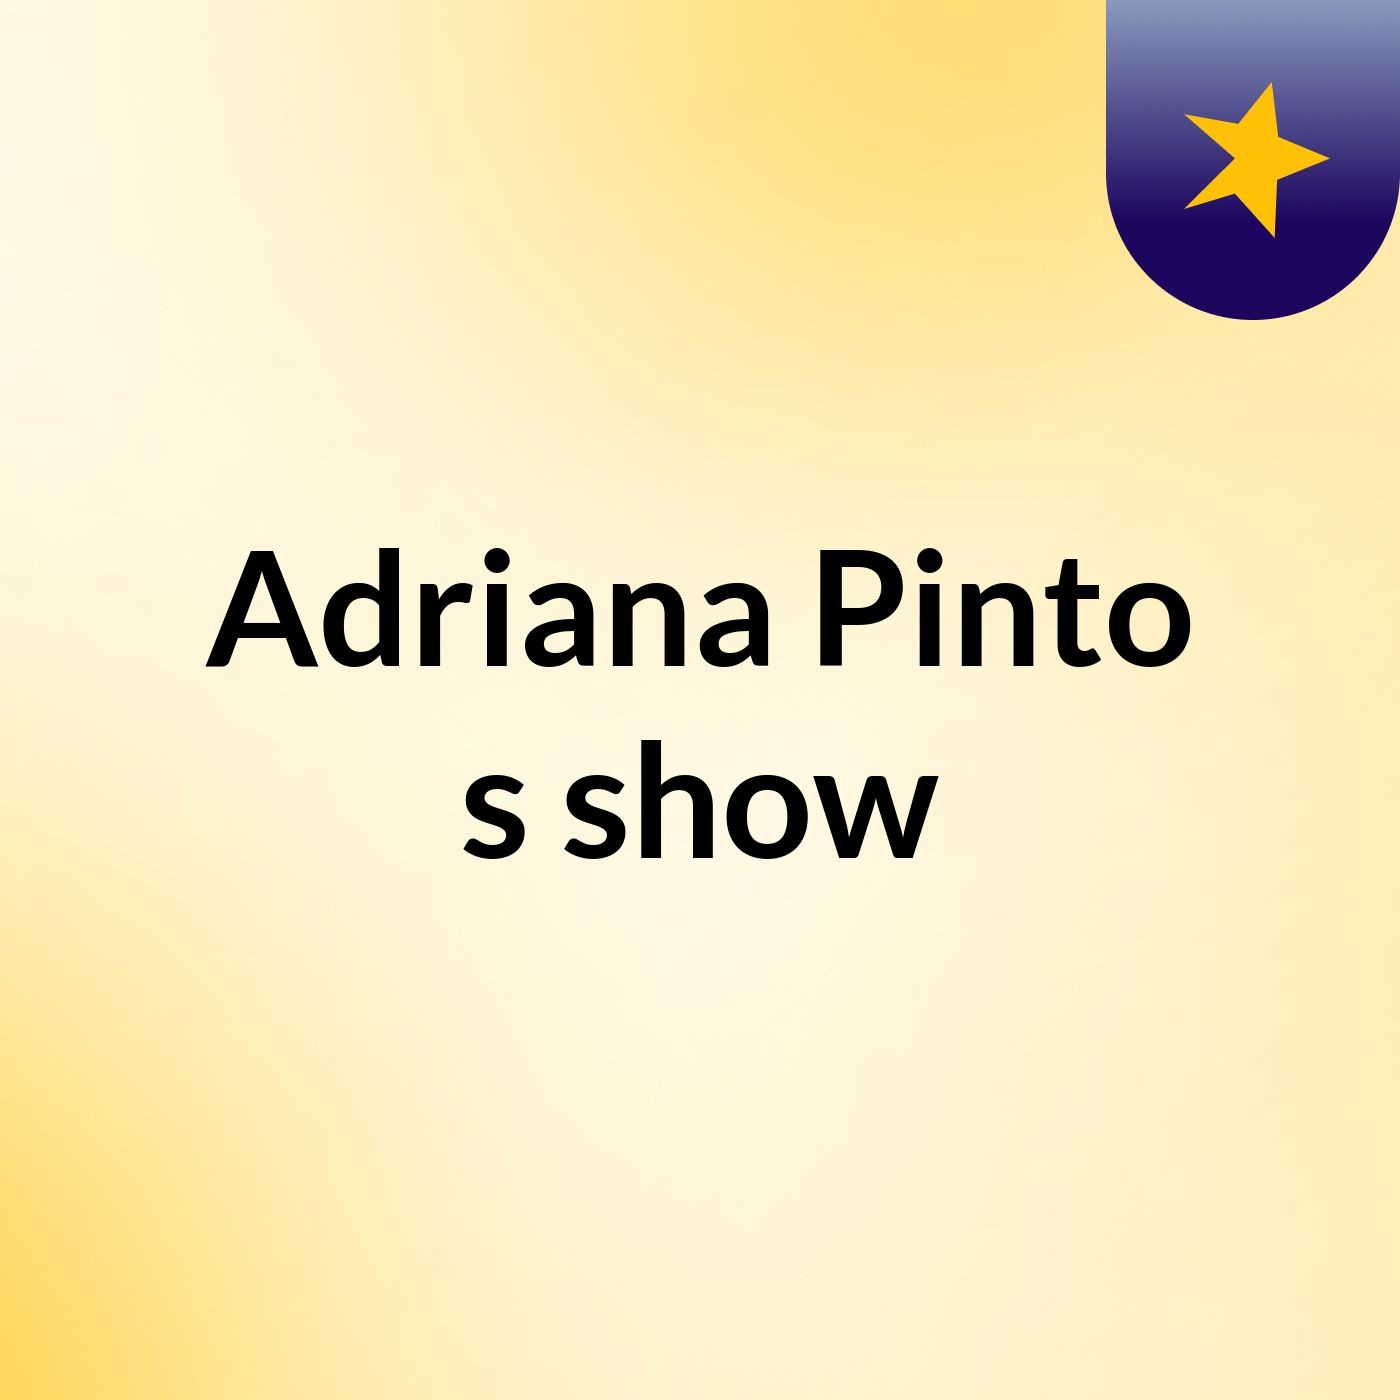 Adriana Pinto's show